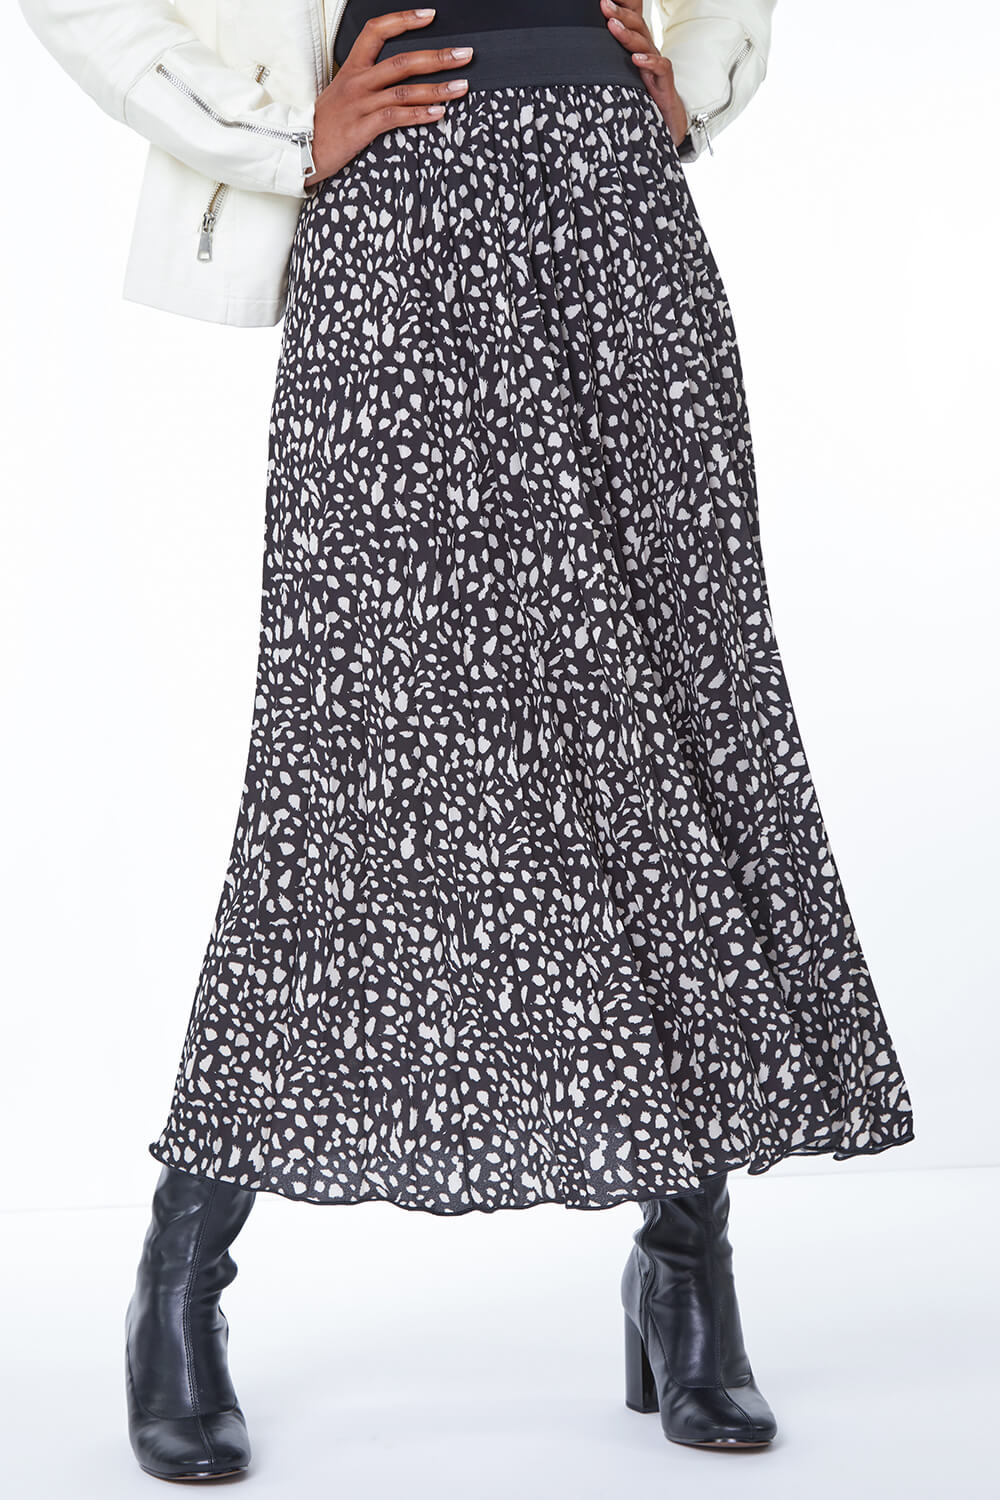 Black Petite Pleated Polka Dot Skirt, Image 5 of 5